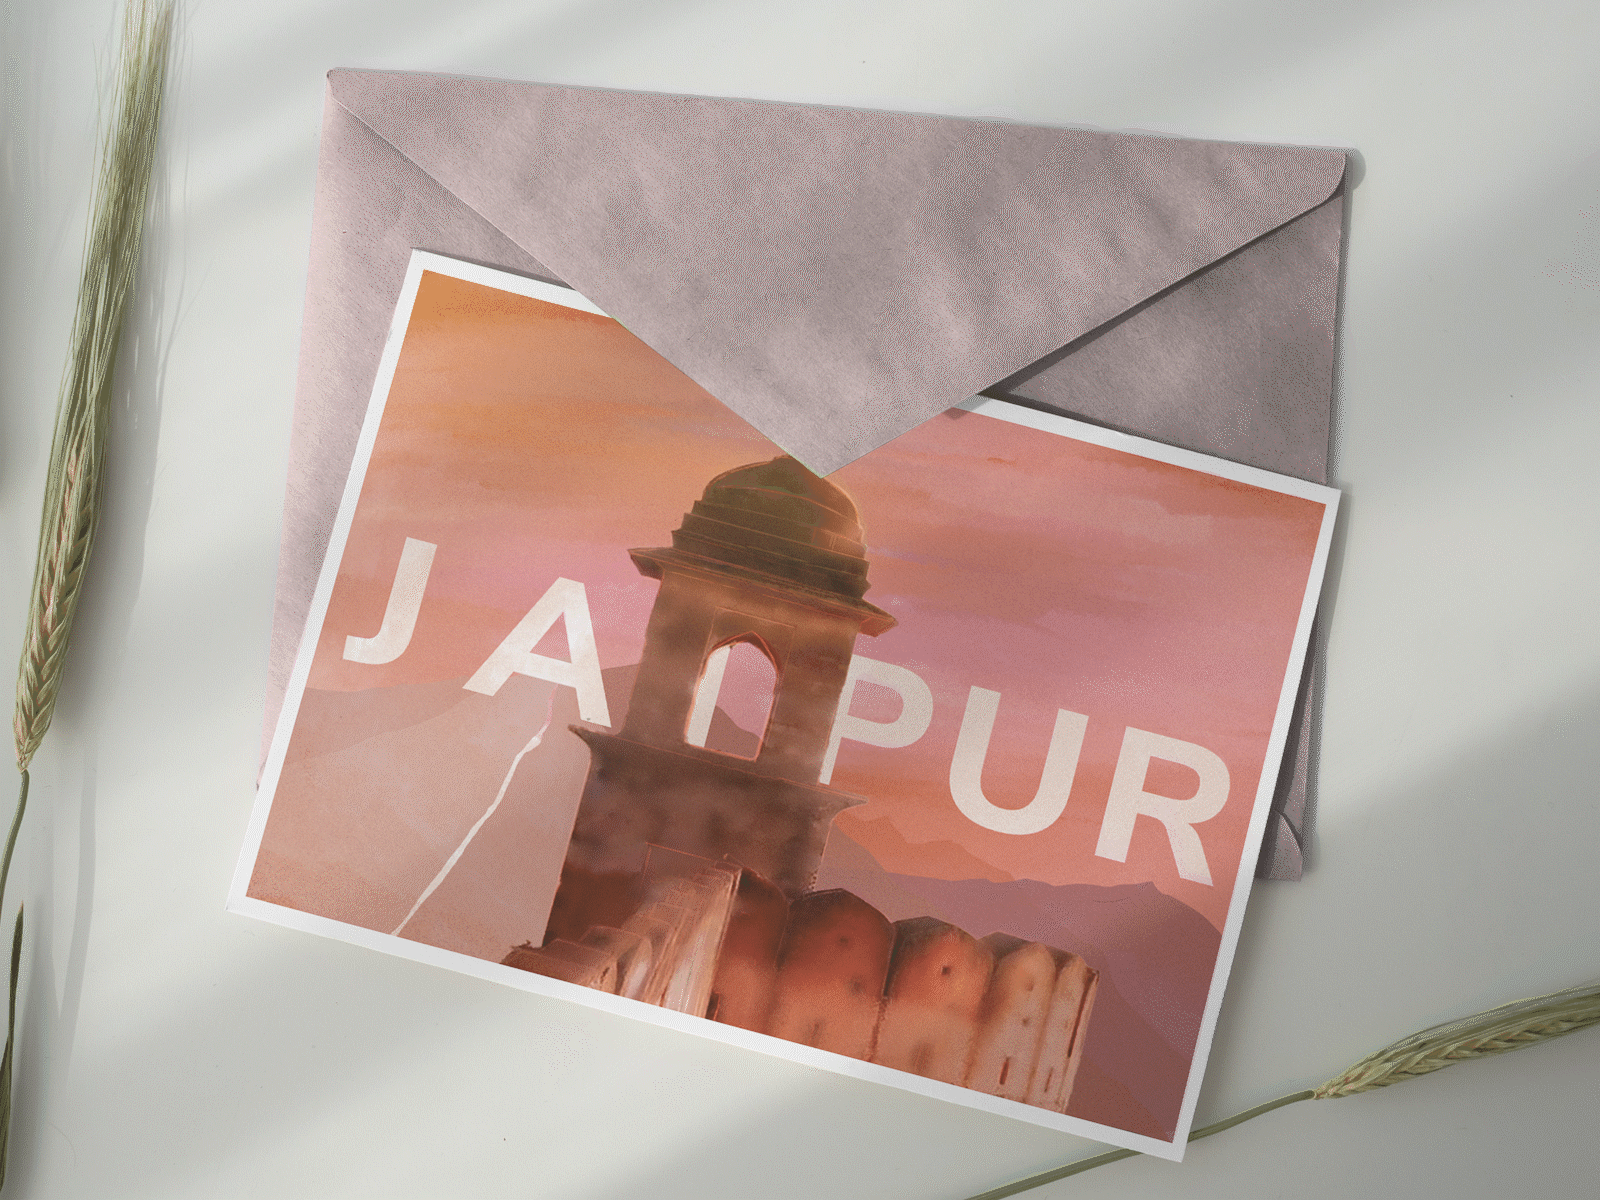 Post card from Jaipur, Rajasthan